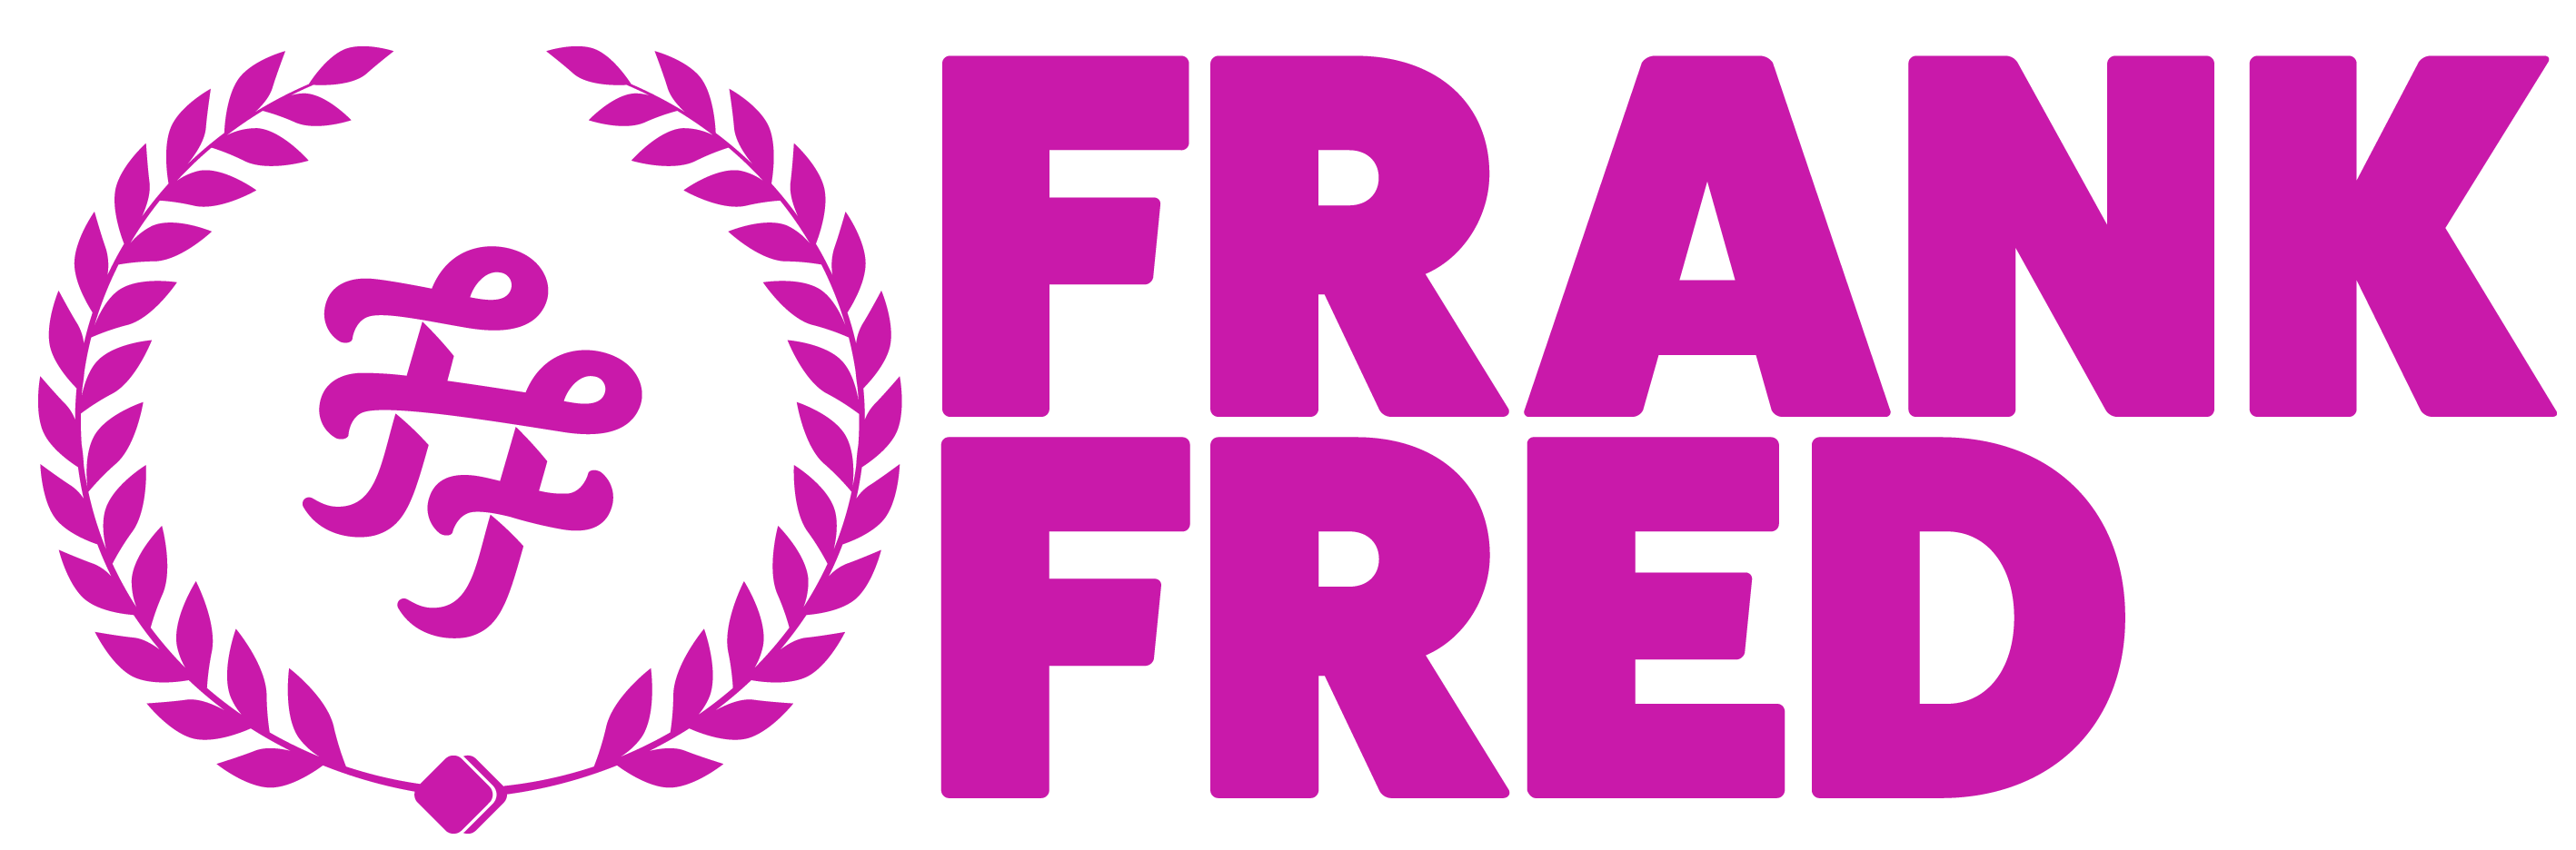 2023-03-12-1678621862-frank fred logo.png